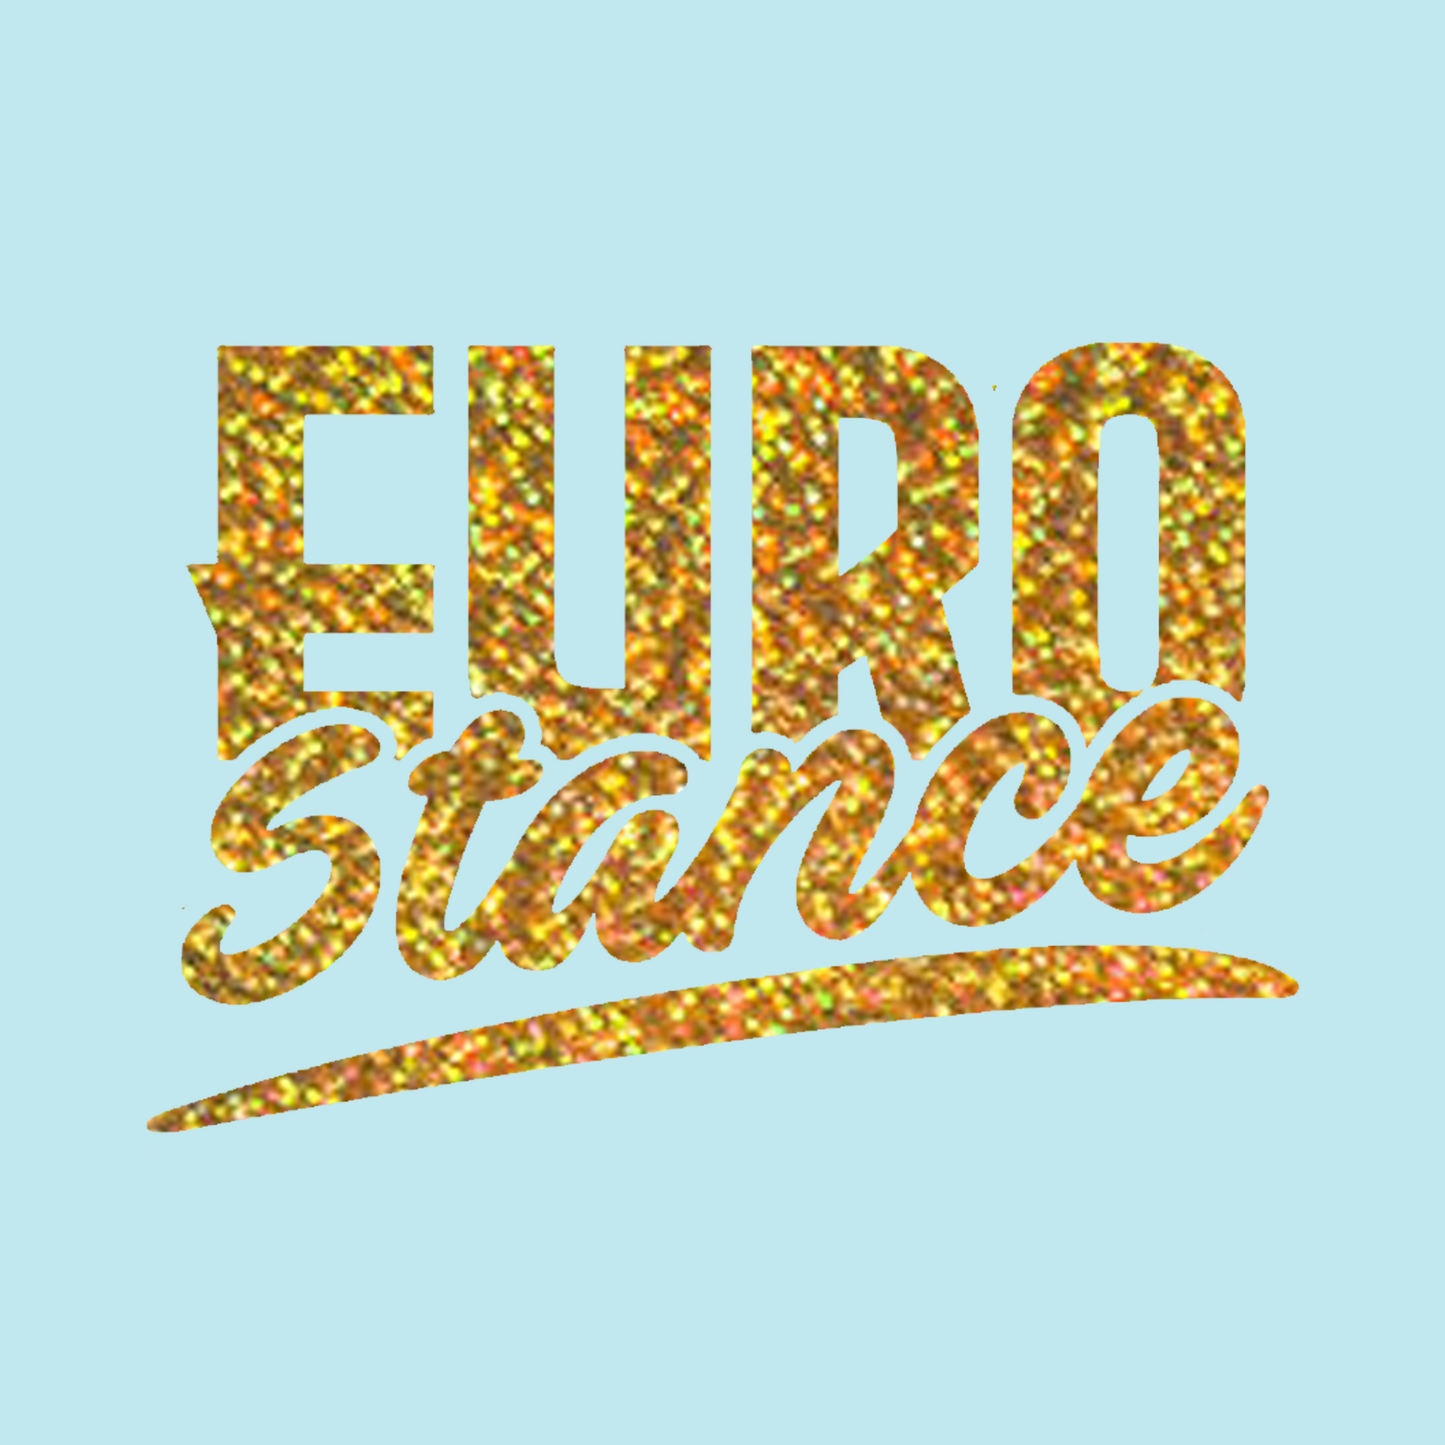 EuroStance Classic Vinyl sticker - 100mm wide (small)